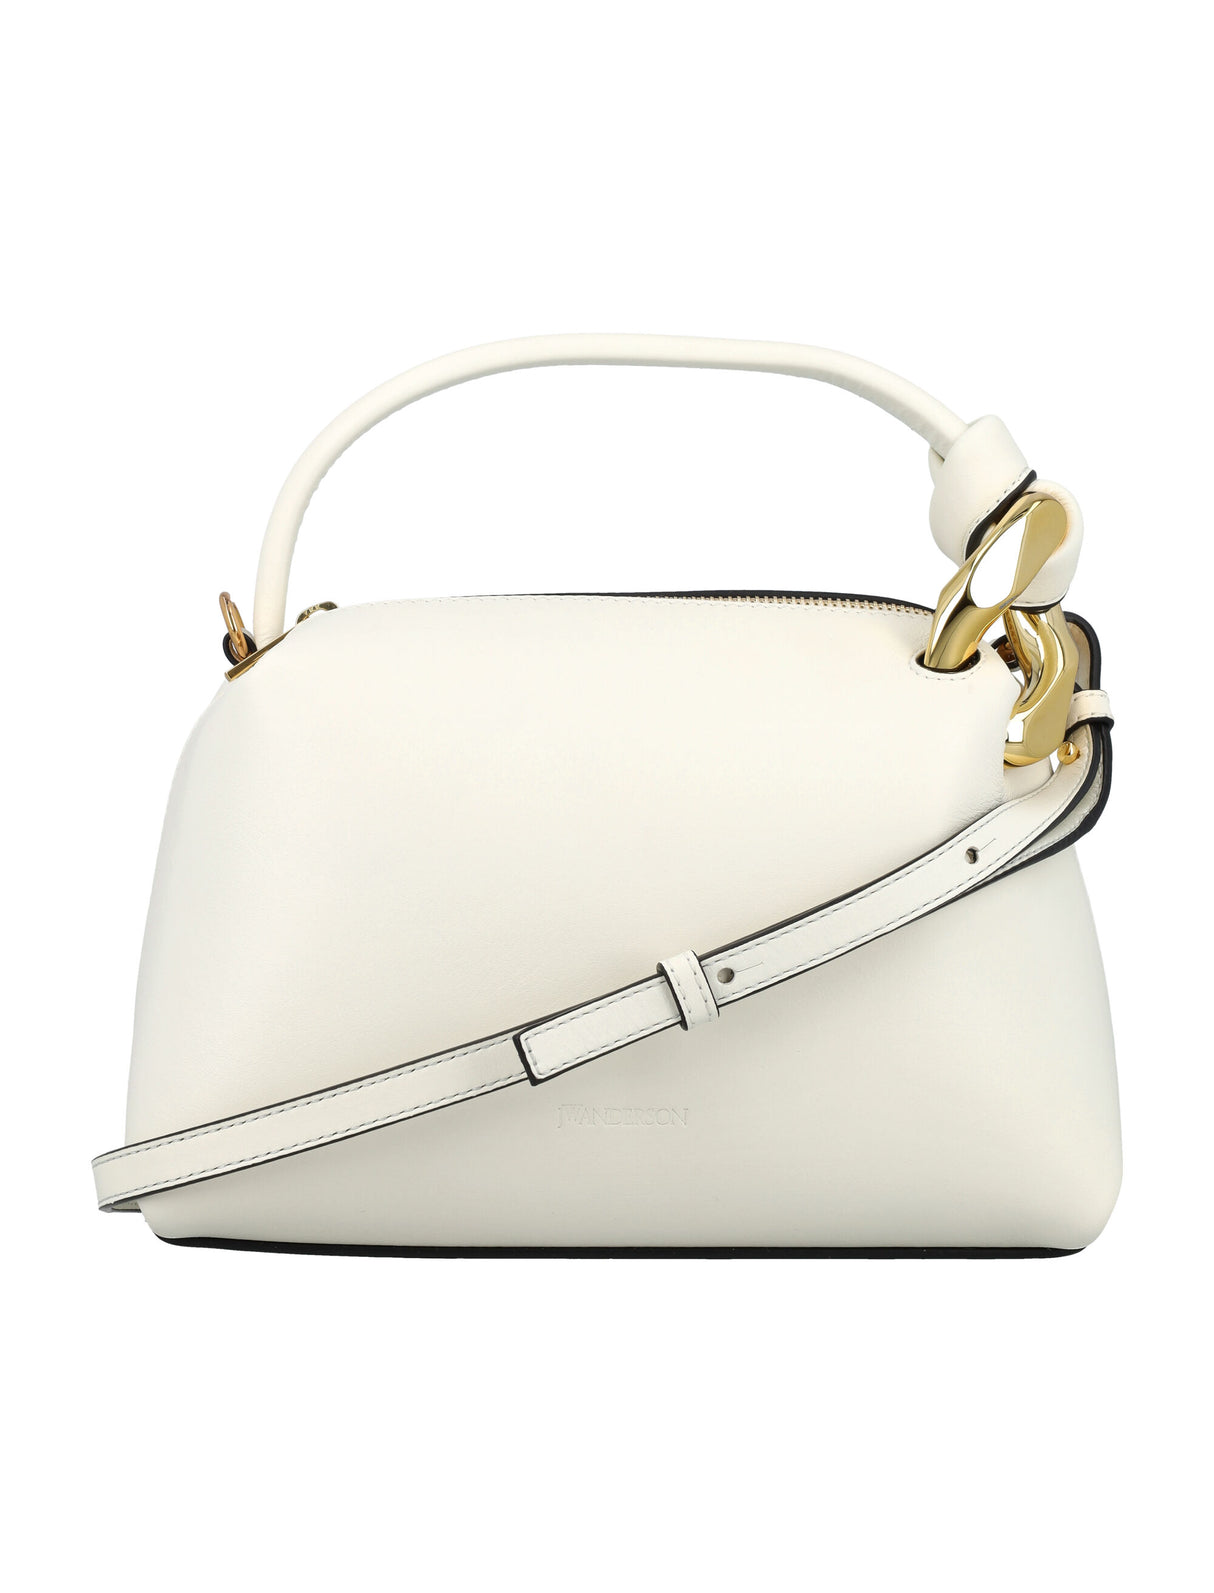 JW ANDERSON Small Corner Crossbody Leather Handbag with Gold Chain Link - Mini, Off-White, 23x16x9cm